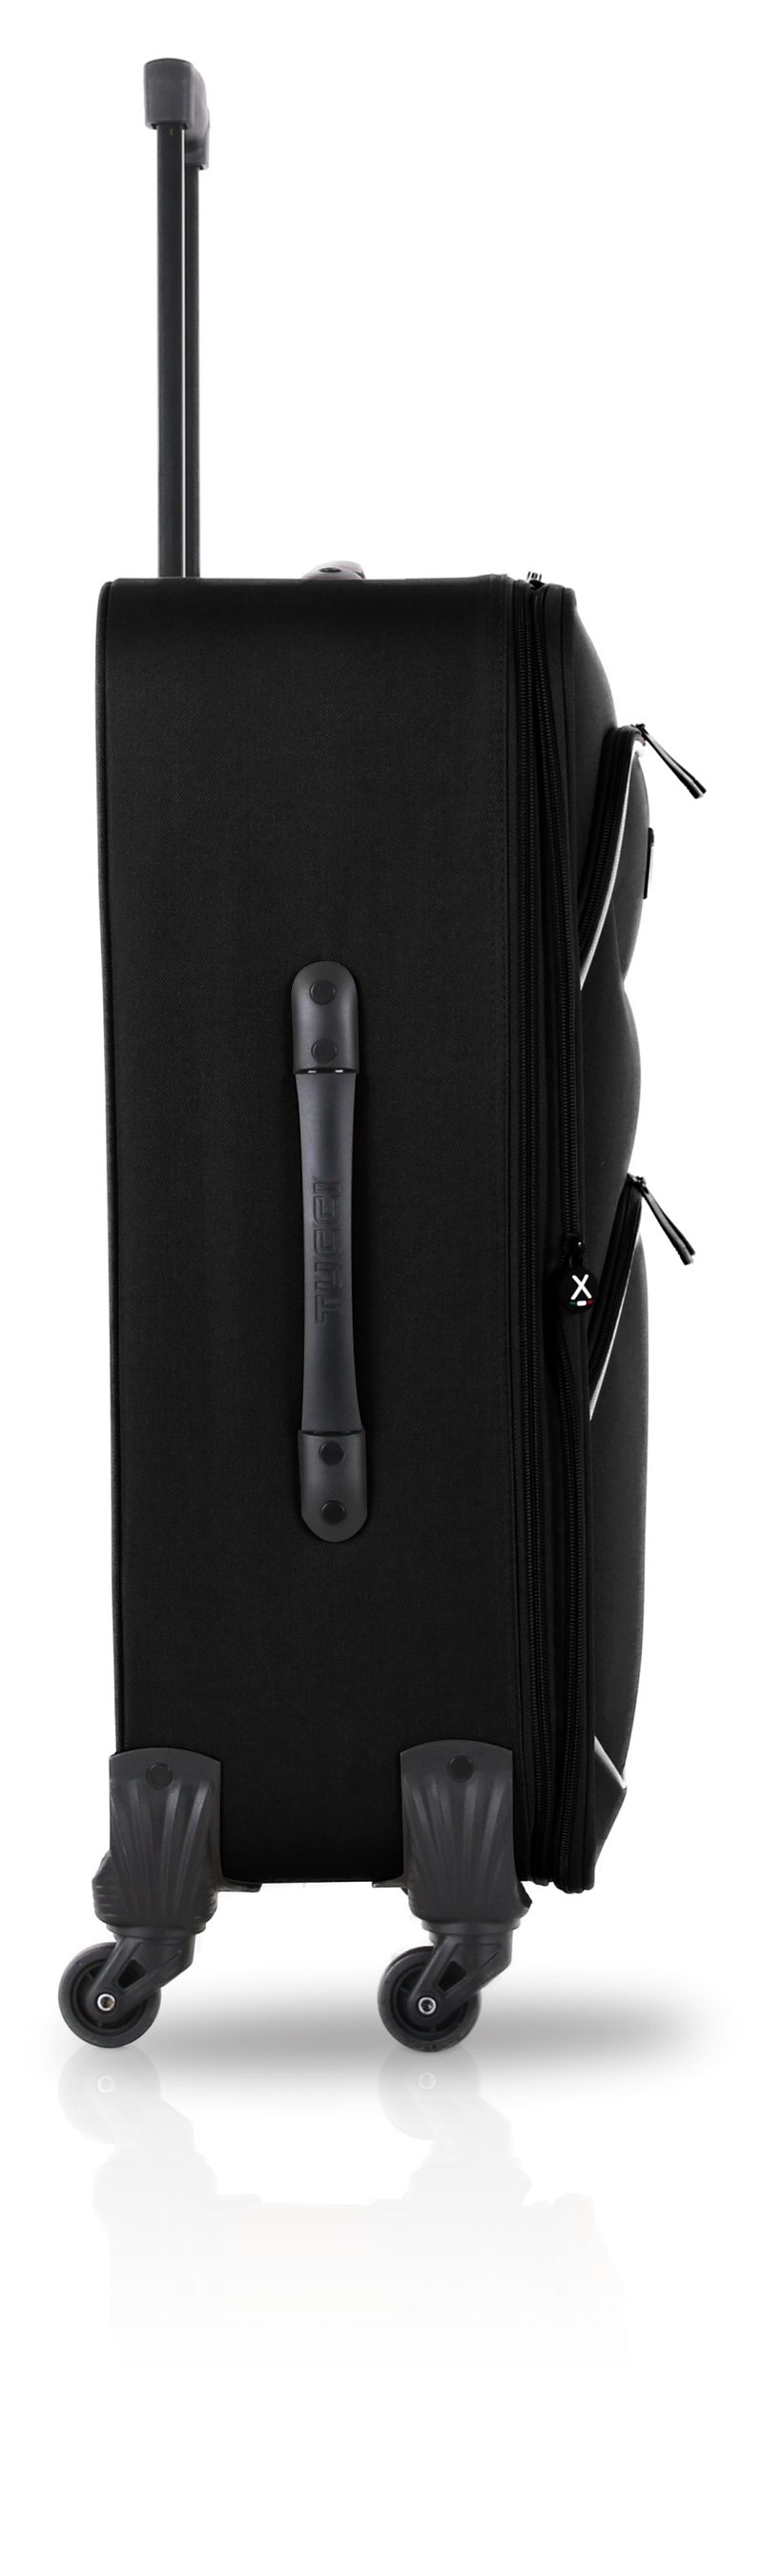 TUCCI Italy BEN FATTO 24" Medium Luggage Suitcase